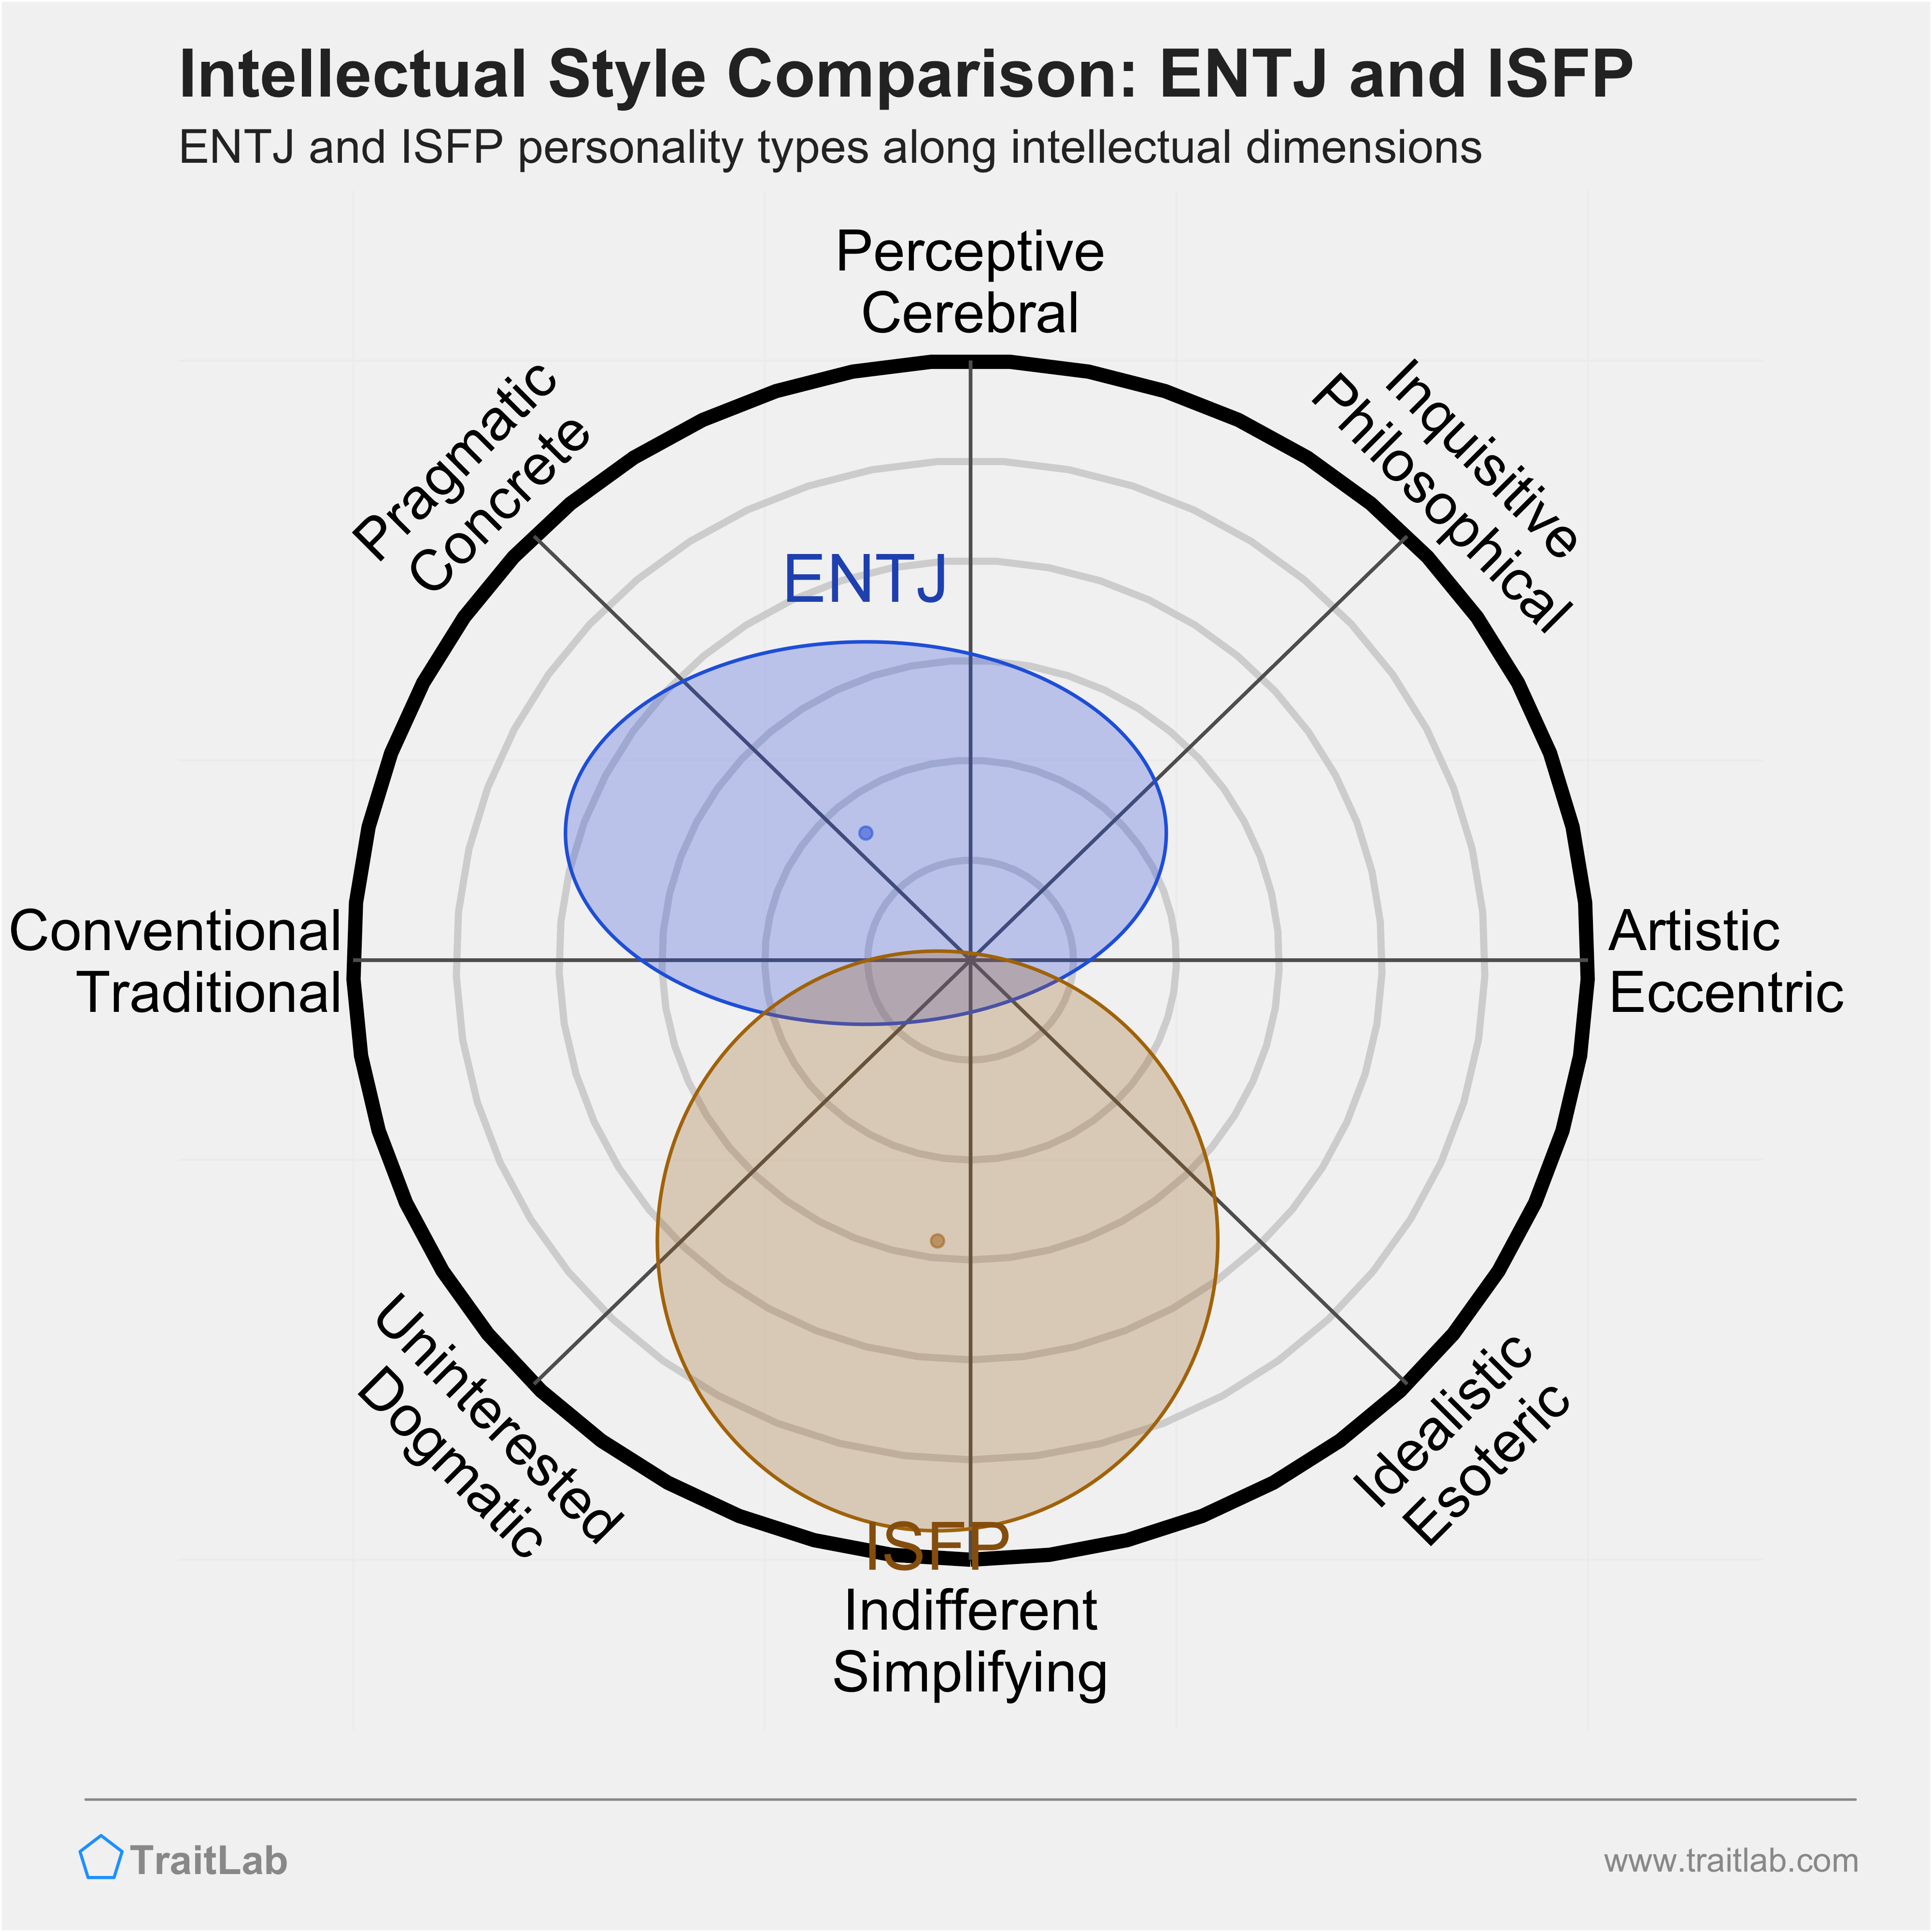 ENTJ and ISFP comparison across intellectual dimensions